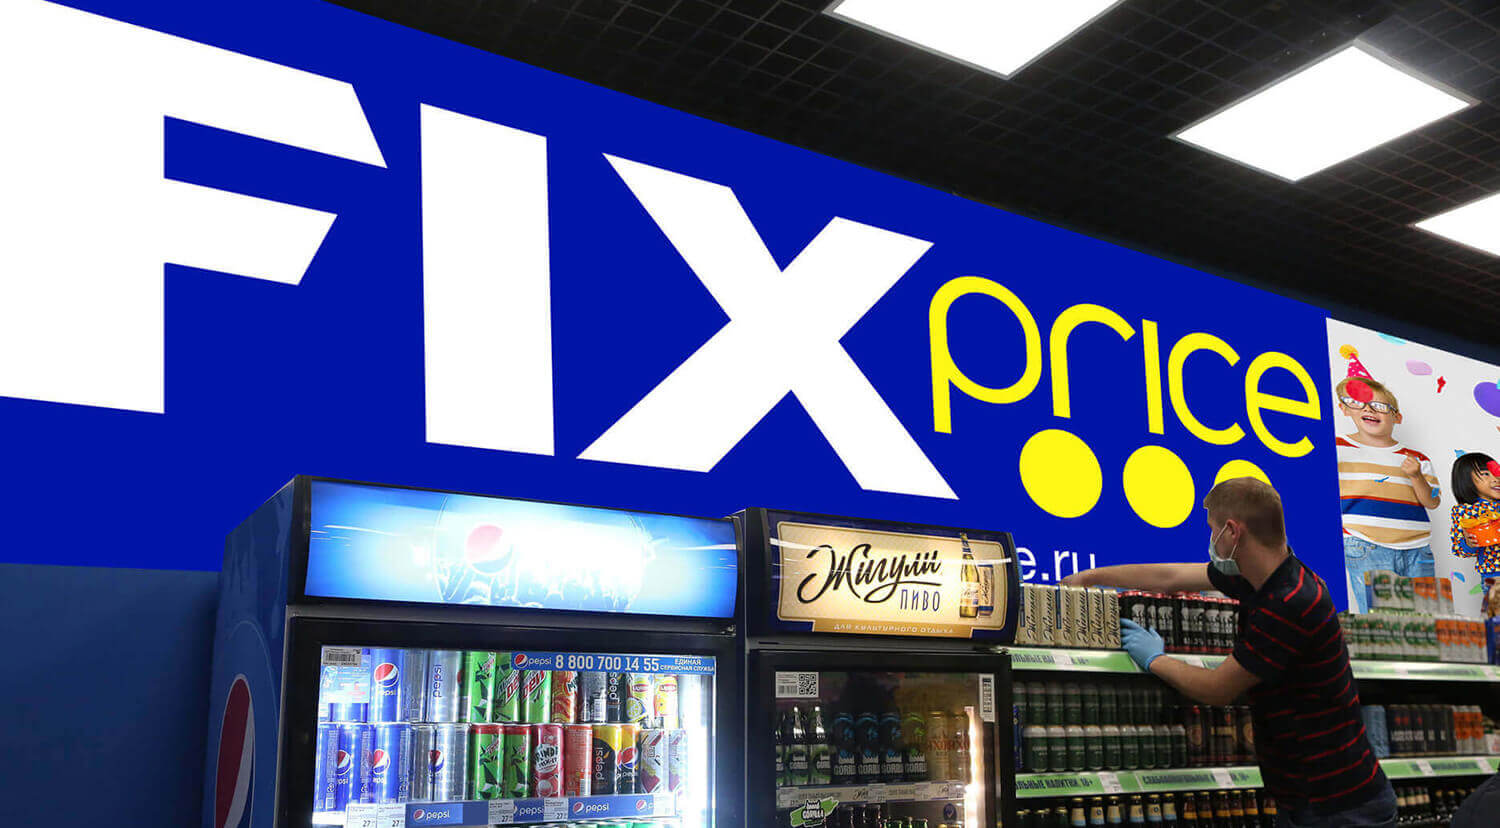 Fix Price Russia, Retail Branding, Store Interior Design and Graphic Communications